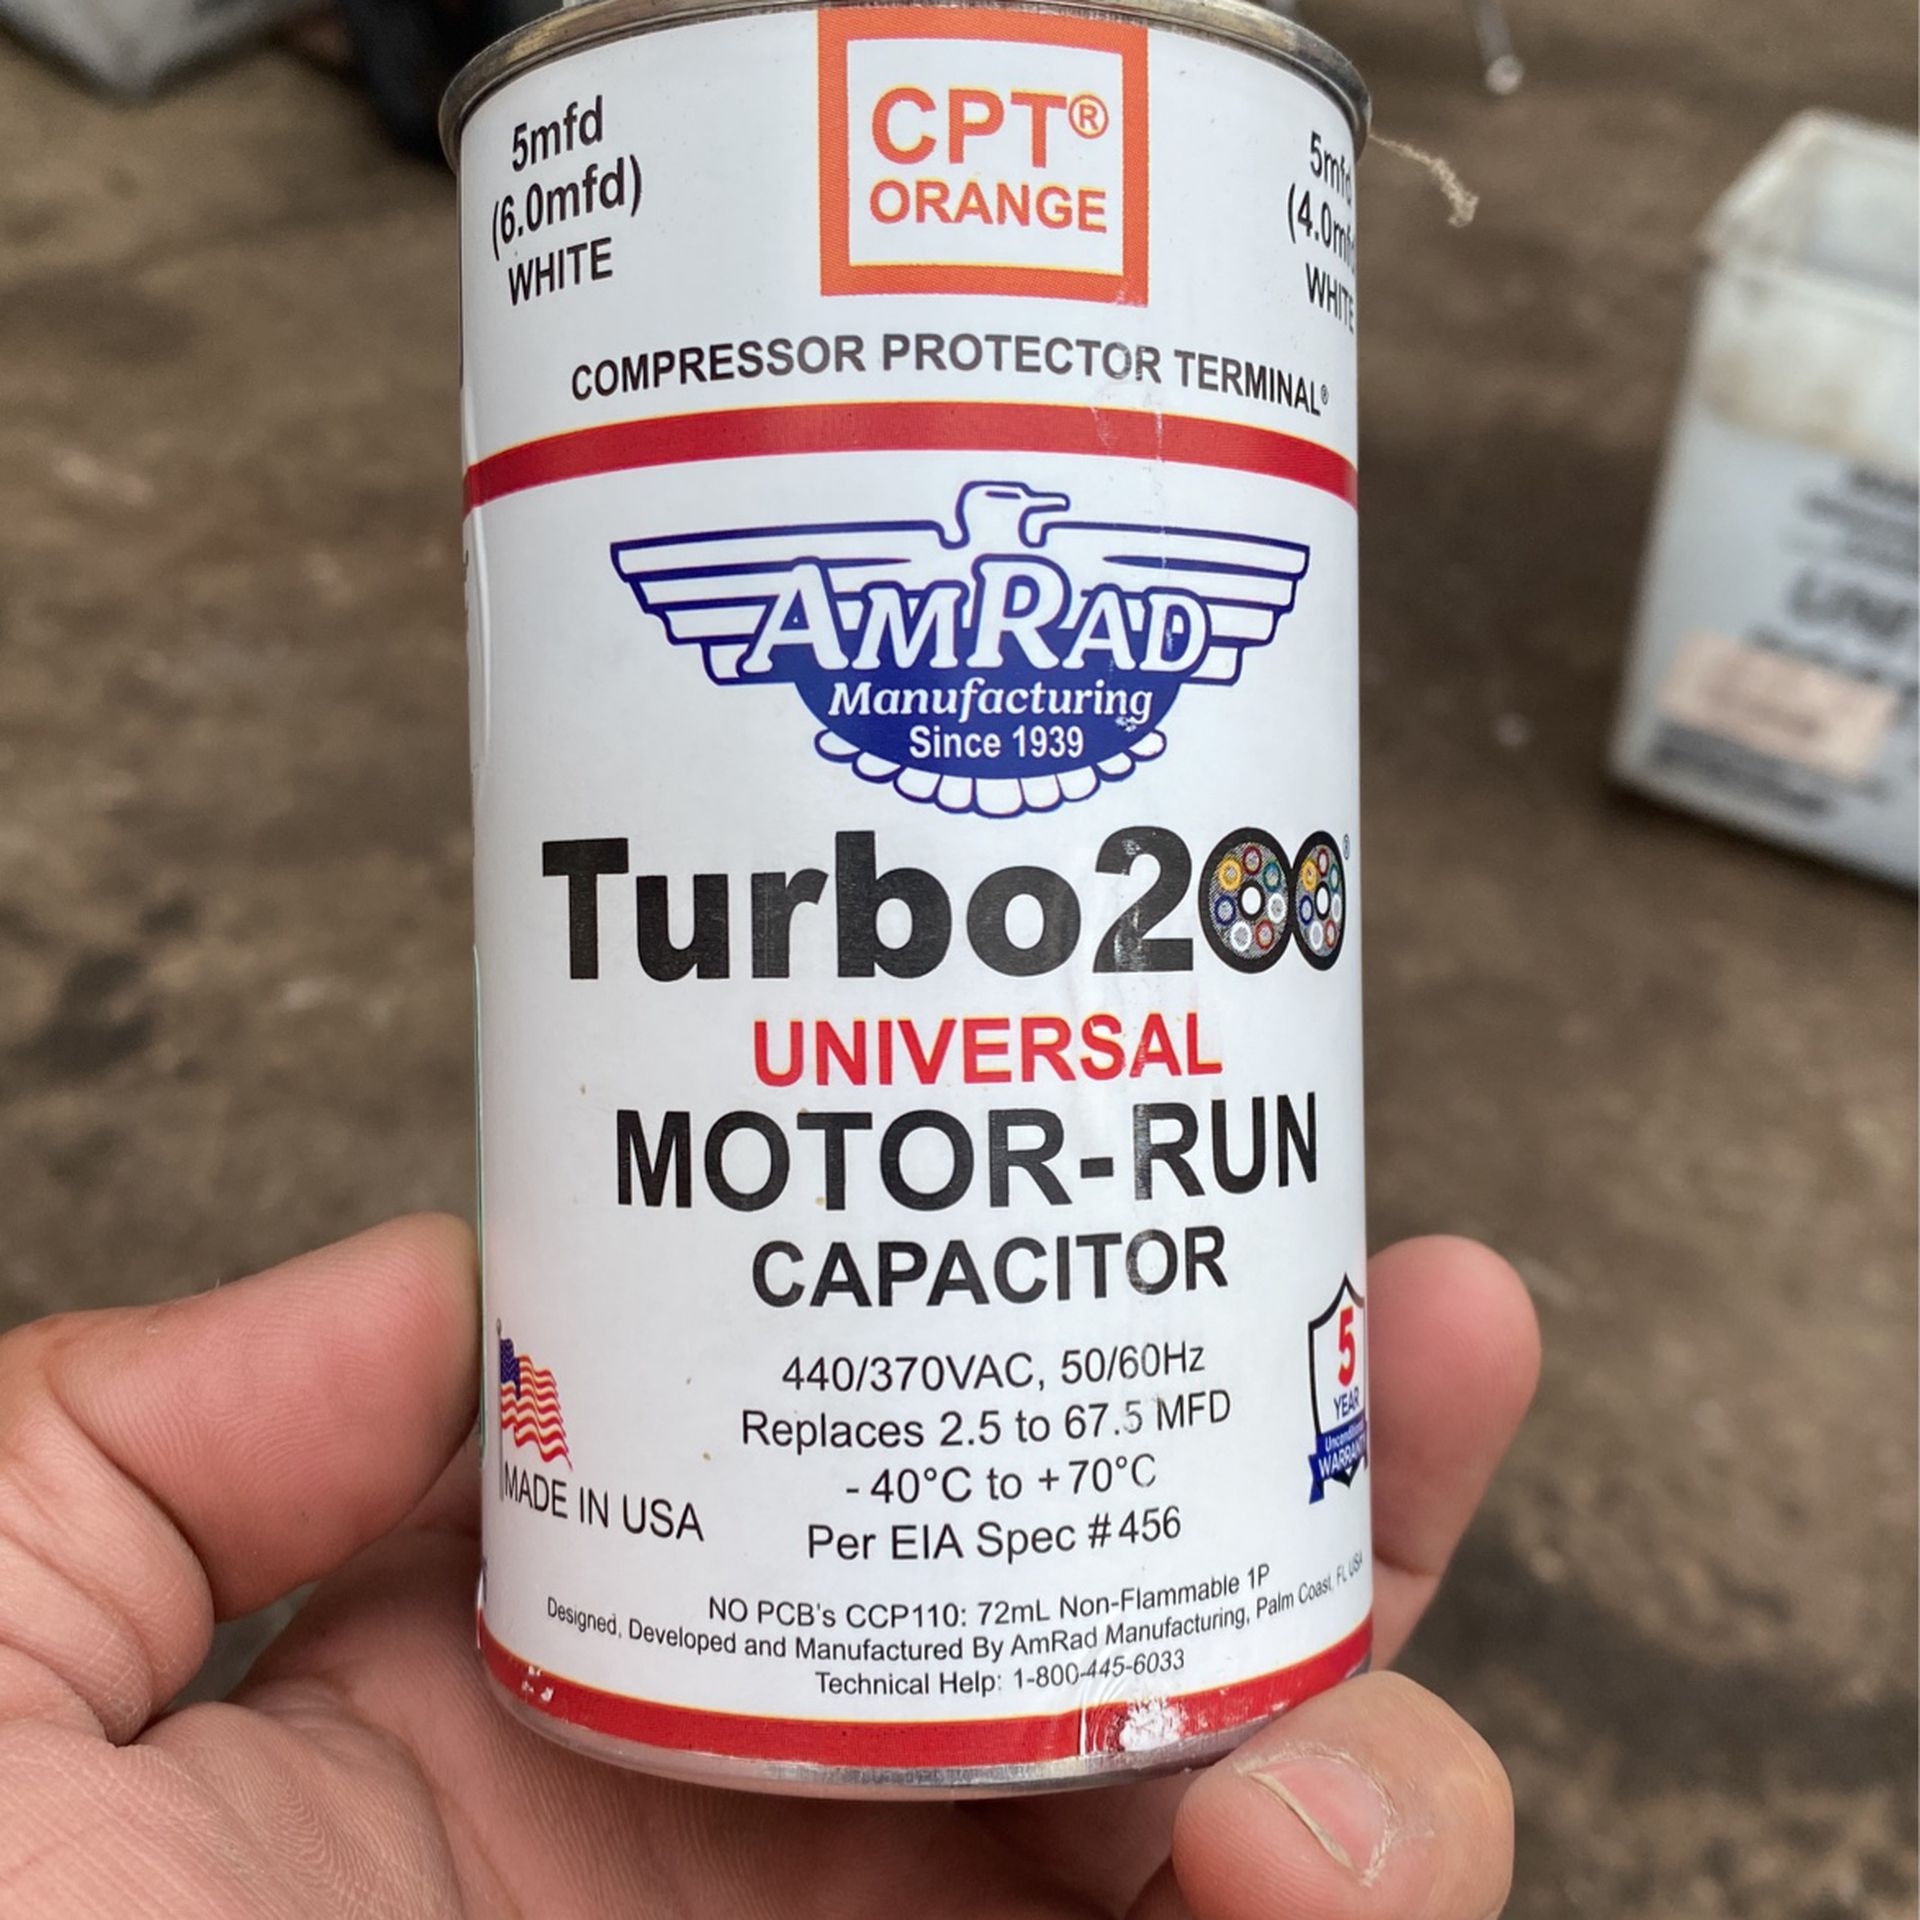 Turbo 200 Universal Motor -run Capacitor